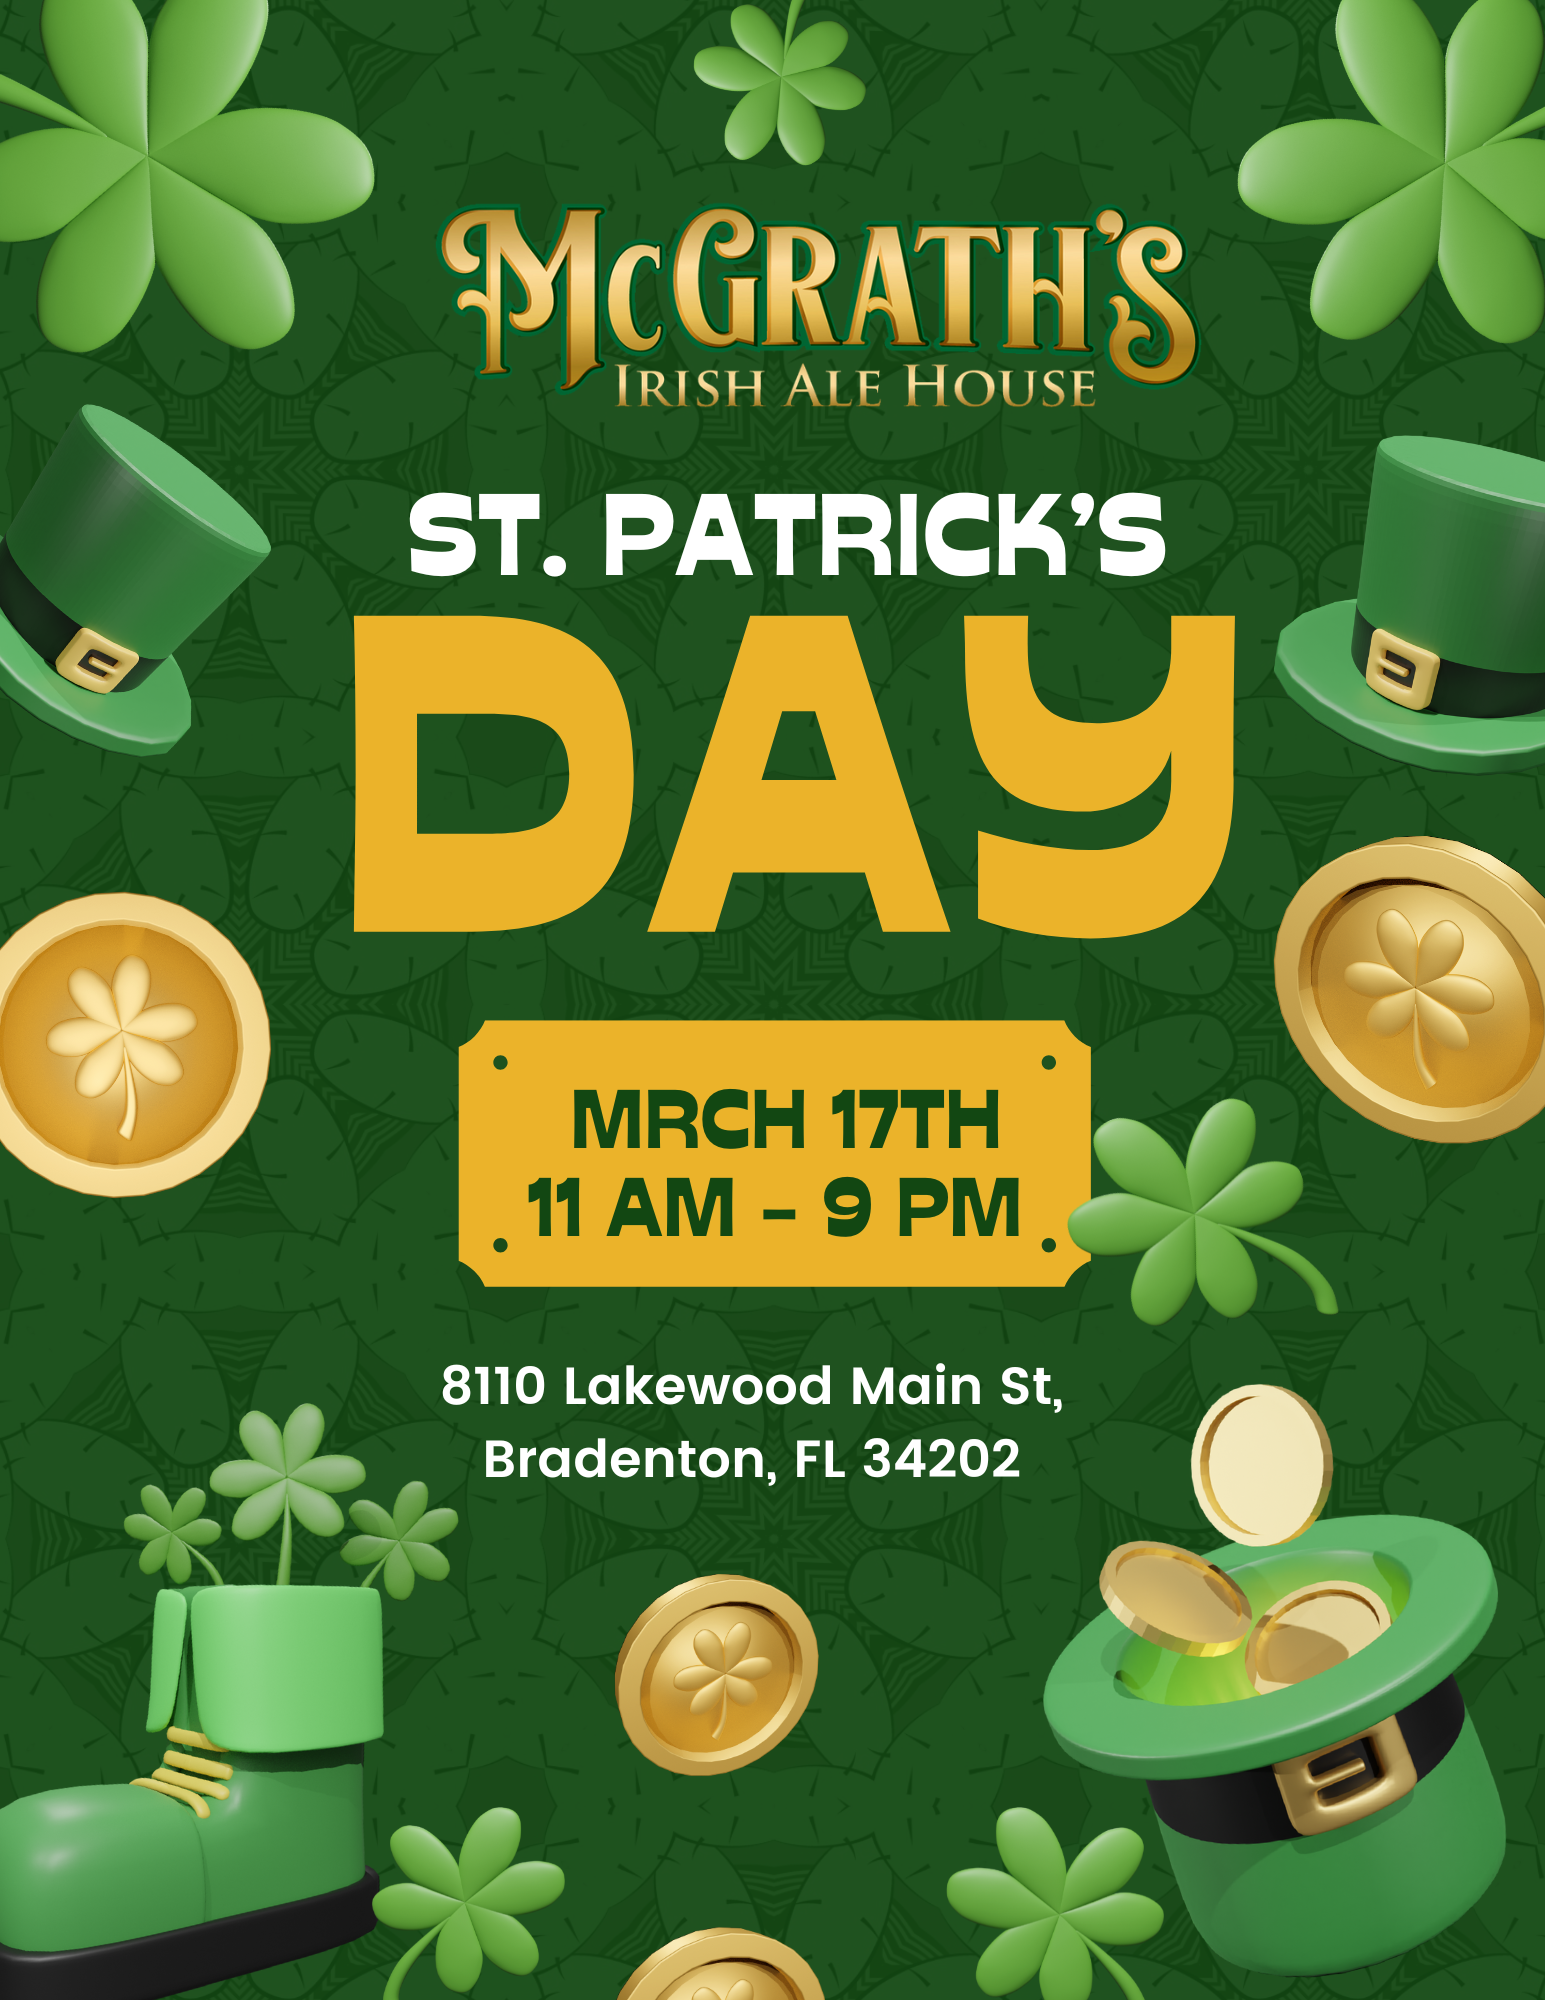 Shamrocks and Shenanigans: Celebrate St. Patrick’s Day at McGrath’s Irish Ale House!